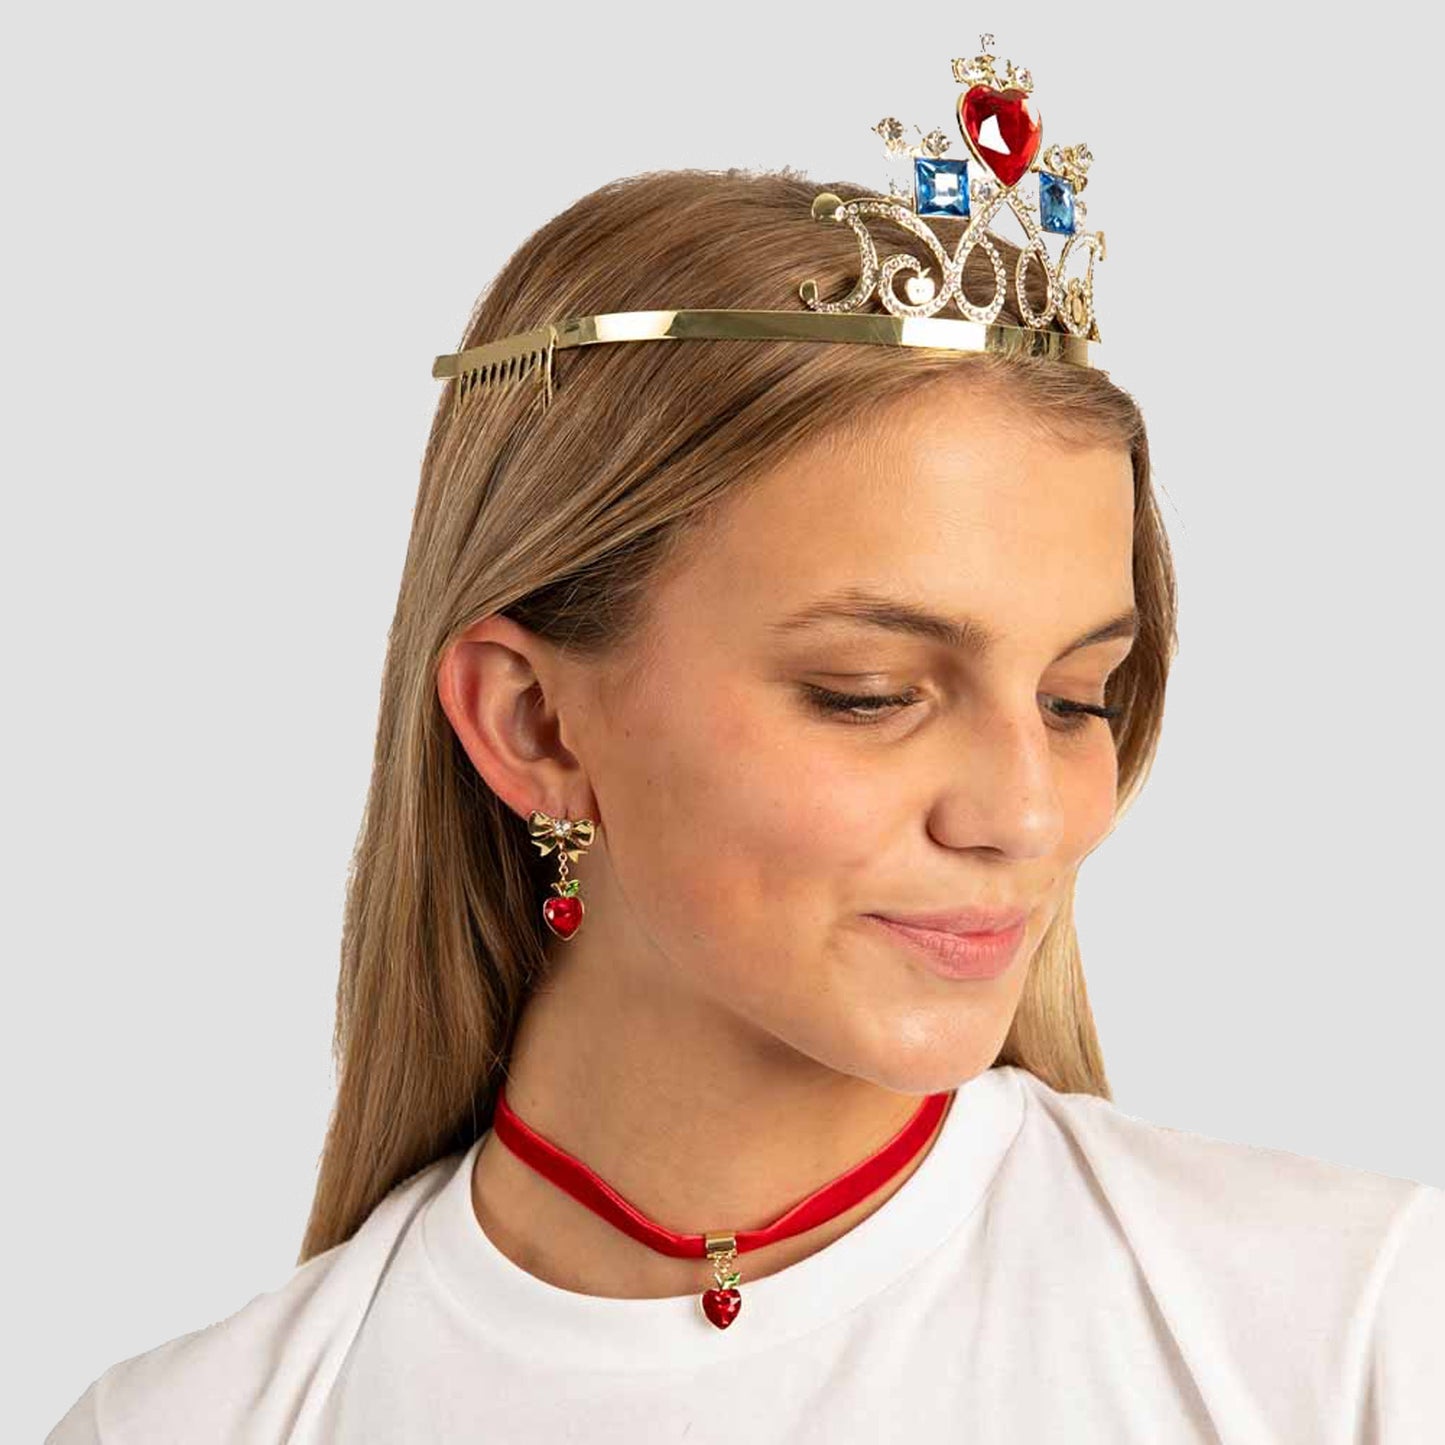 Snow White (Disney Princess) Tiara, Earrings, and Necklace Set